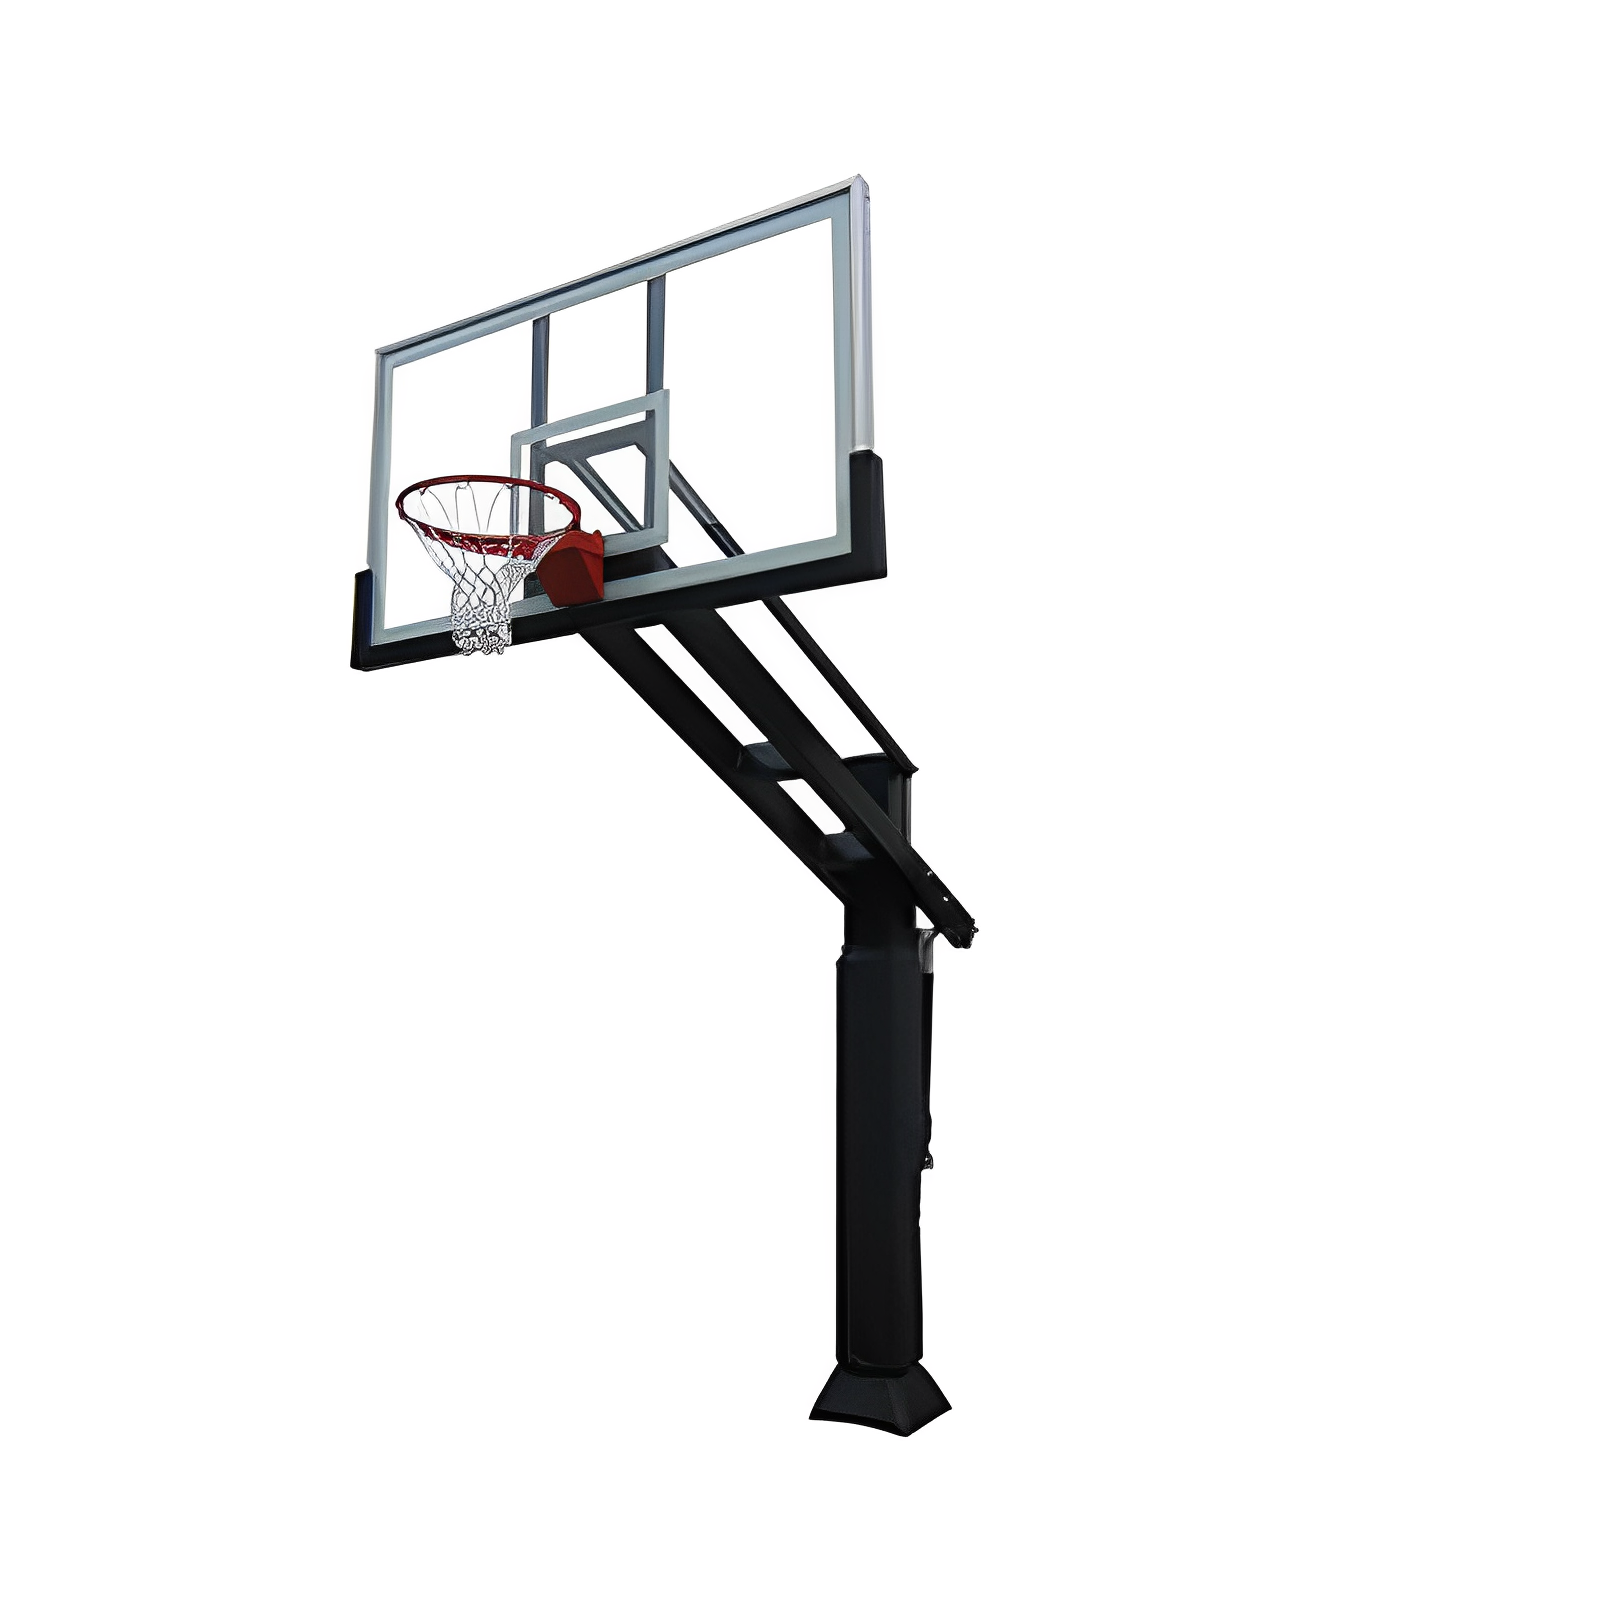 Adjustable Training In-ground Outdoor Basketball Hoop Stand